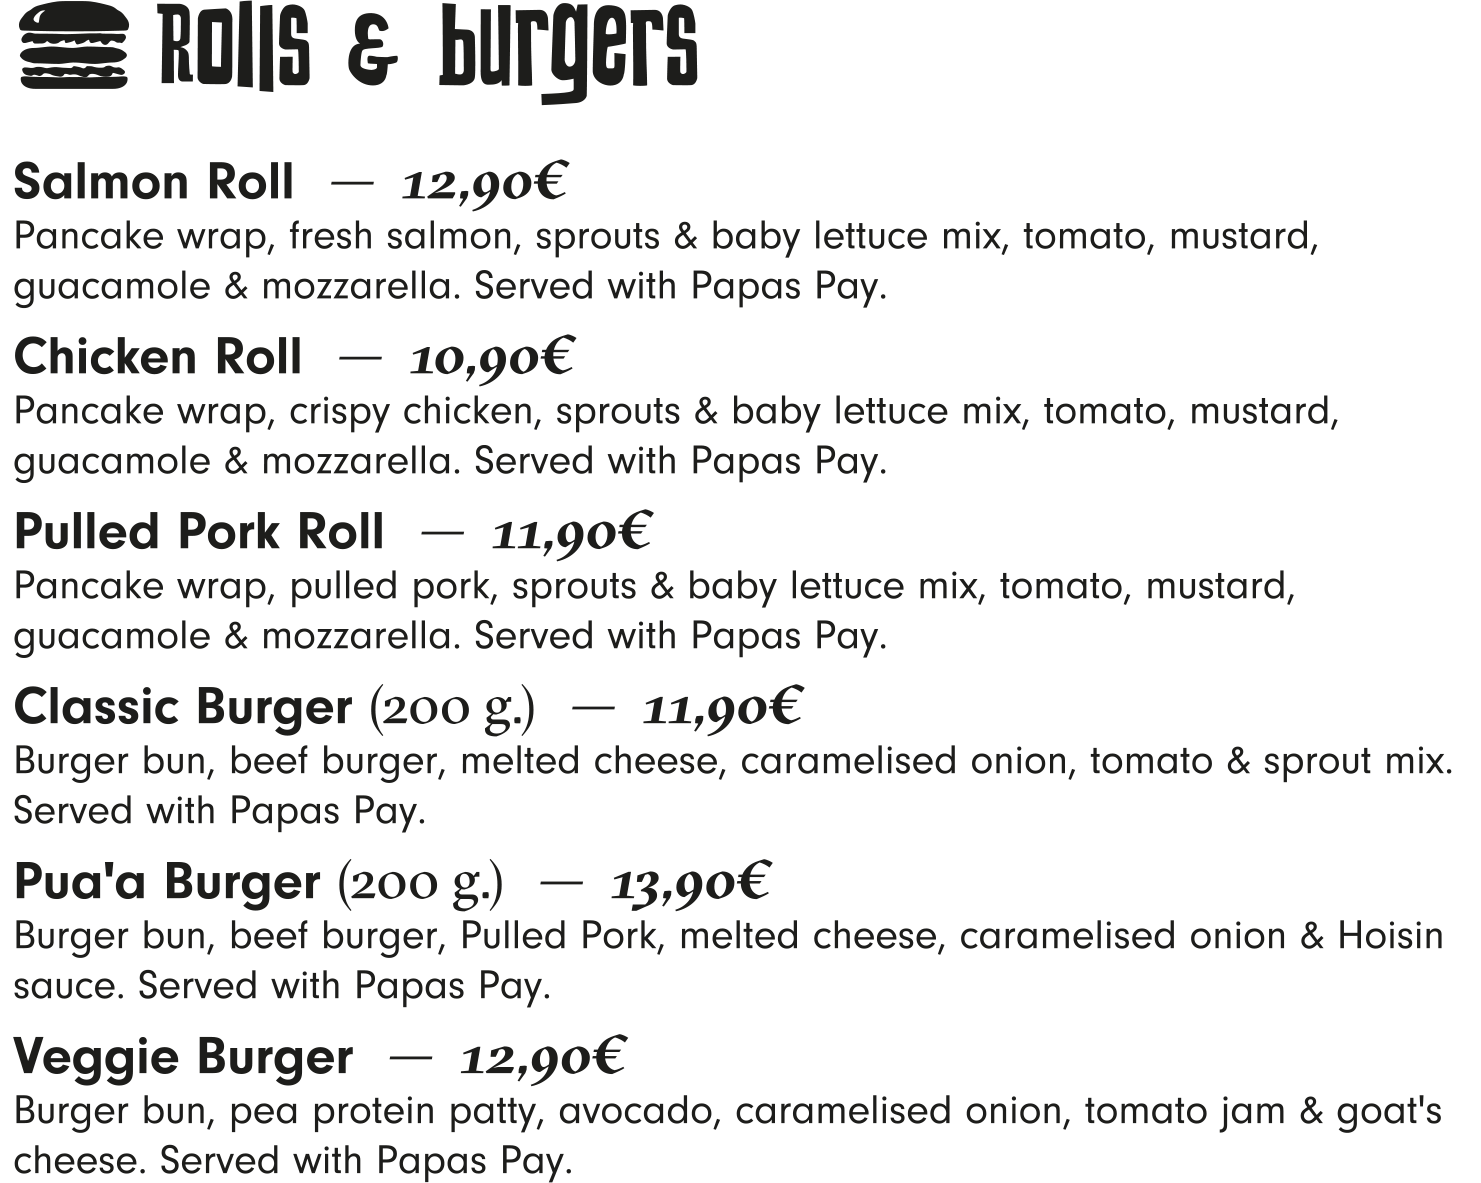 Rolls & Burgers